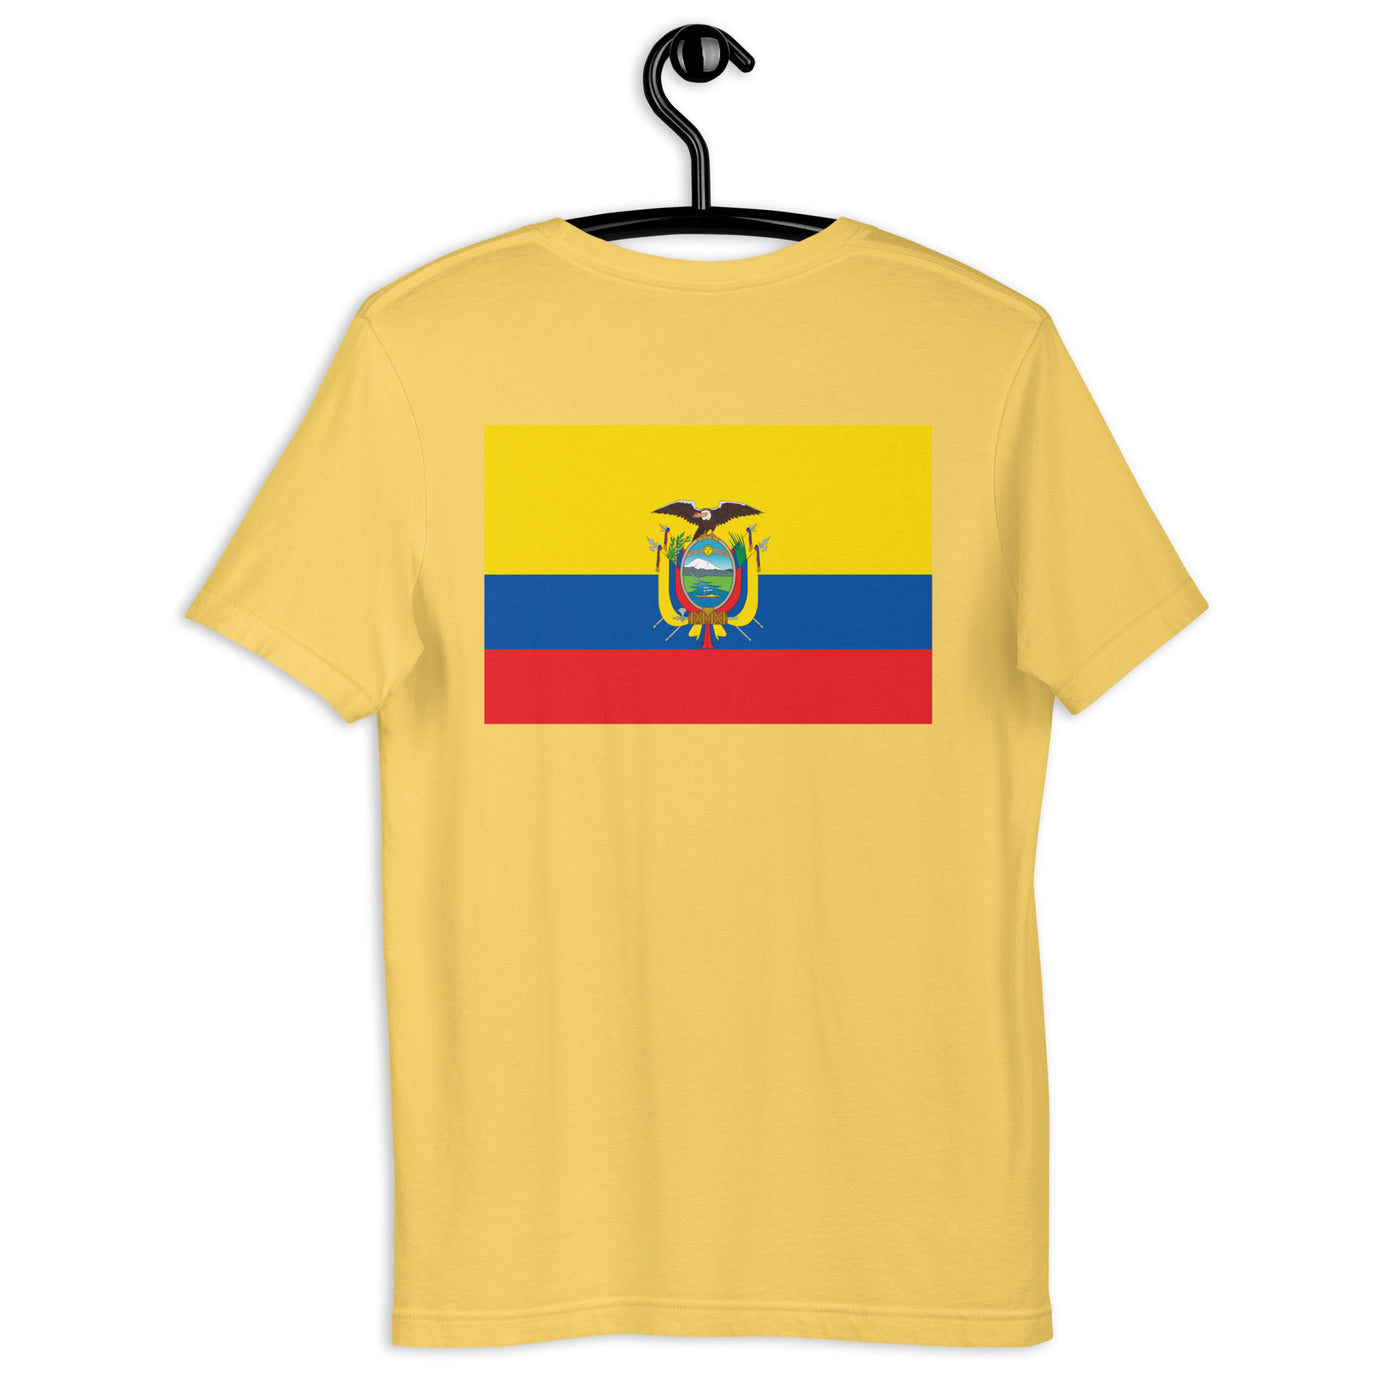 Ecuador POR VIDA (White Text) Unisex t-shirt